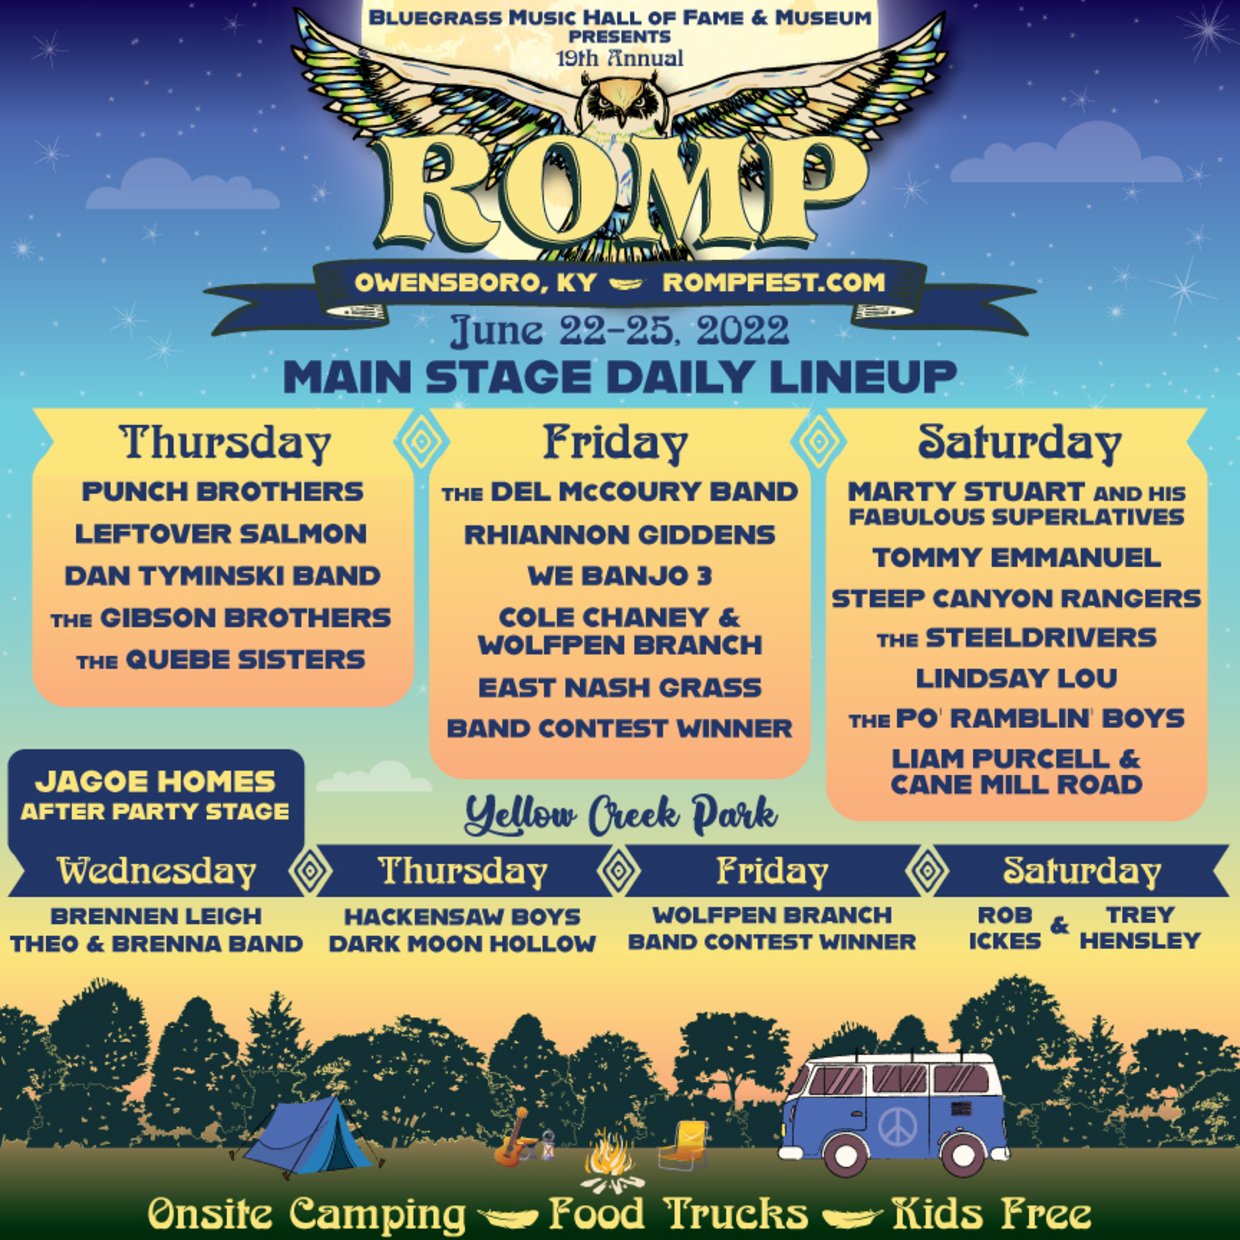 ROMP Festival coming to Owensboro June 2225, 2022 ABC 36 News